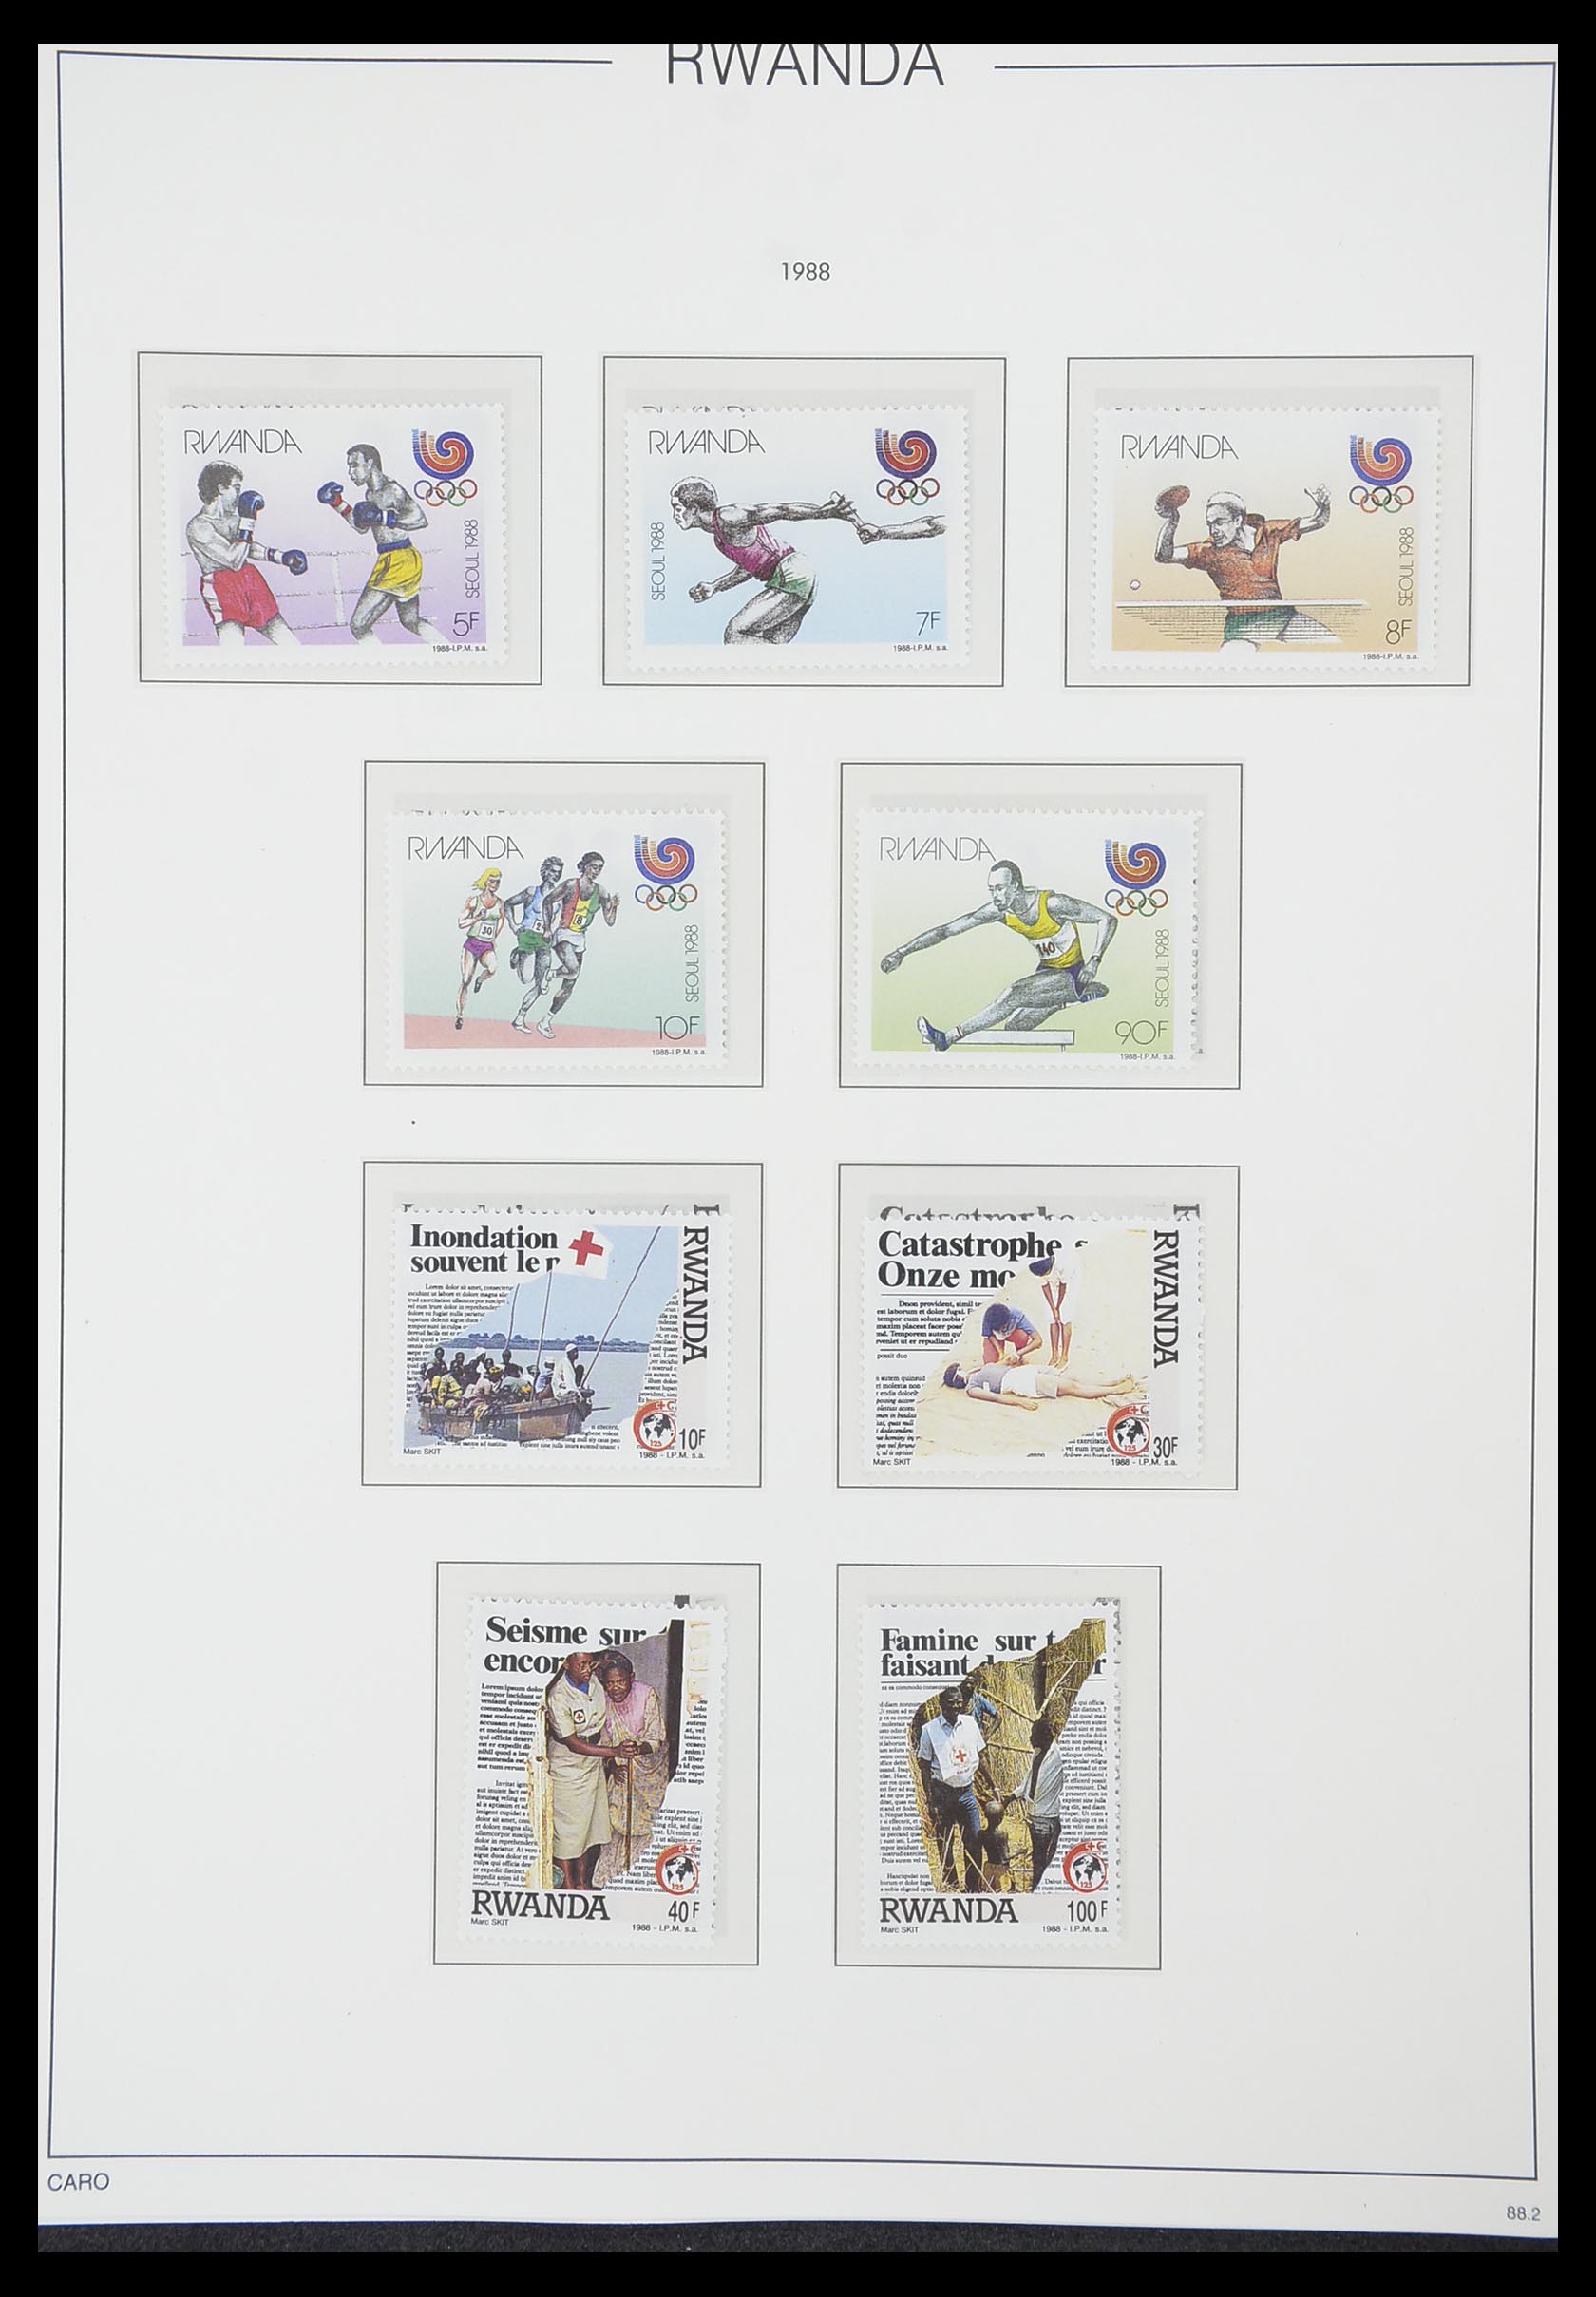 33767 182 - Stamp collection 33767 Rwanda 1962-1988.